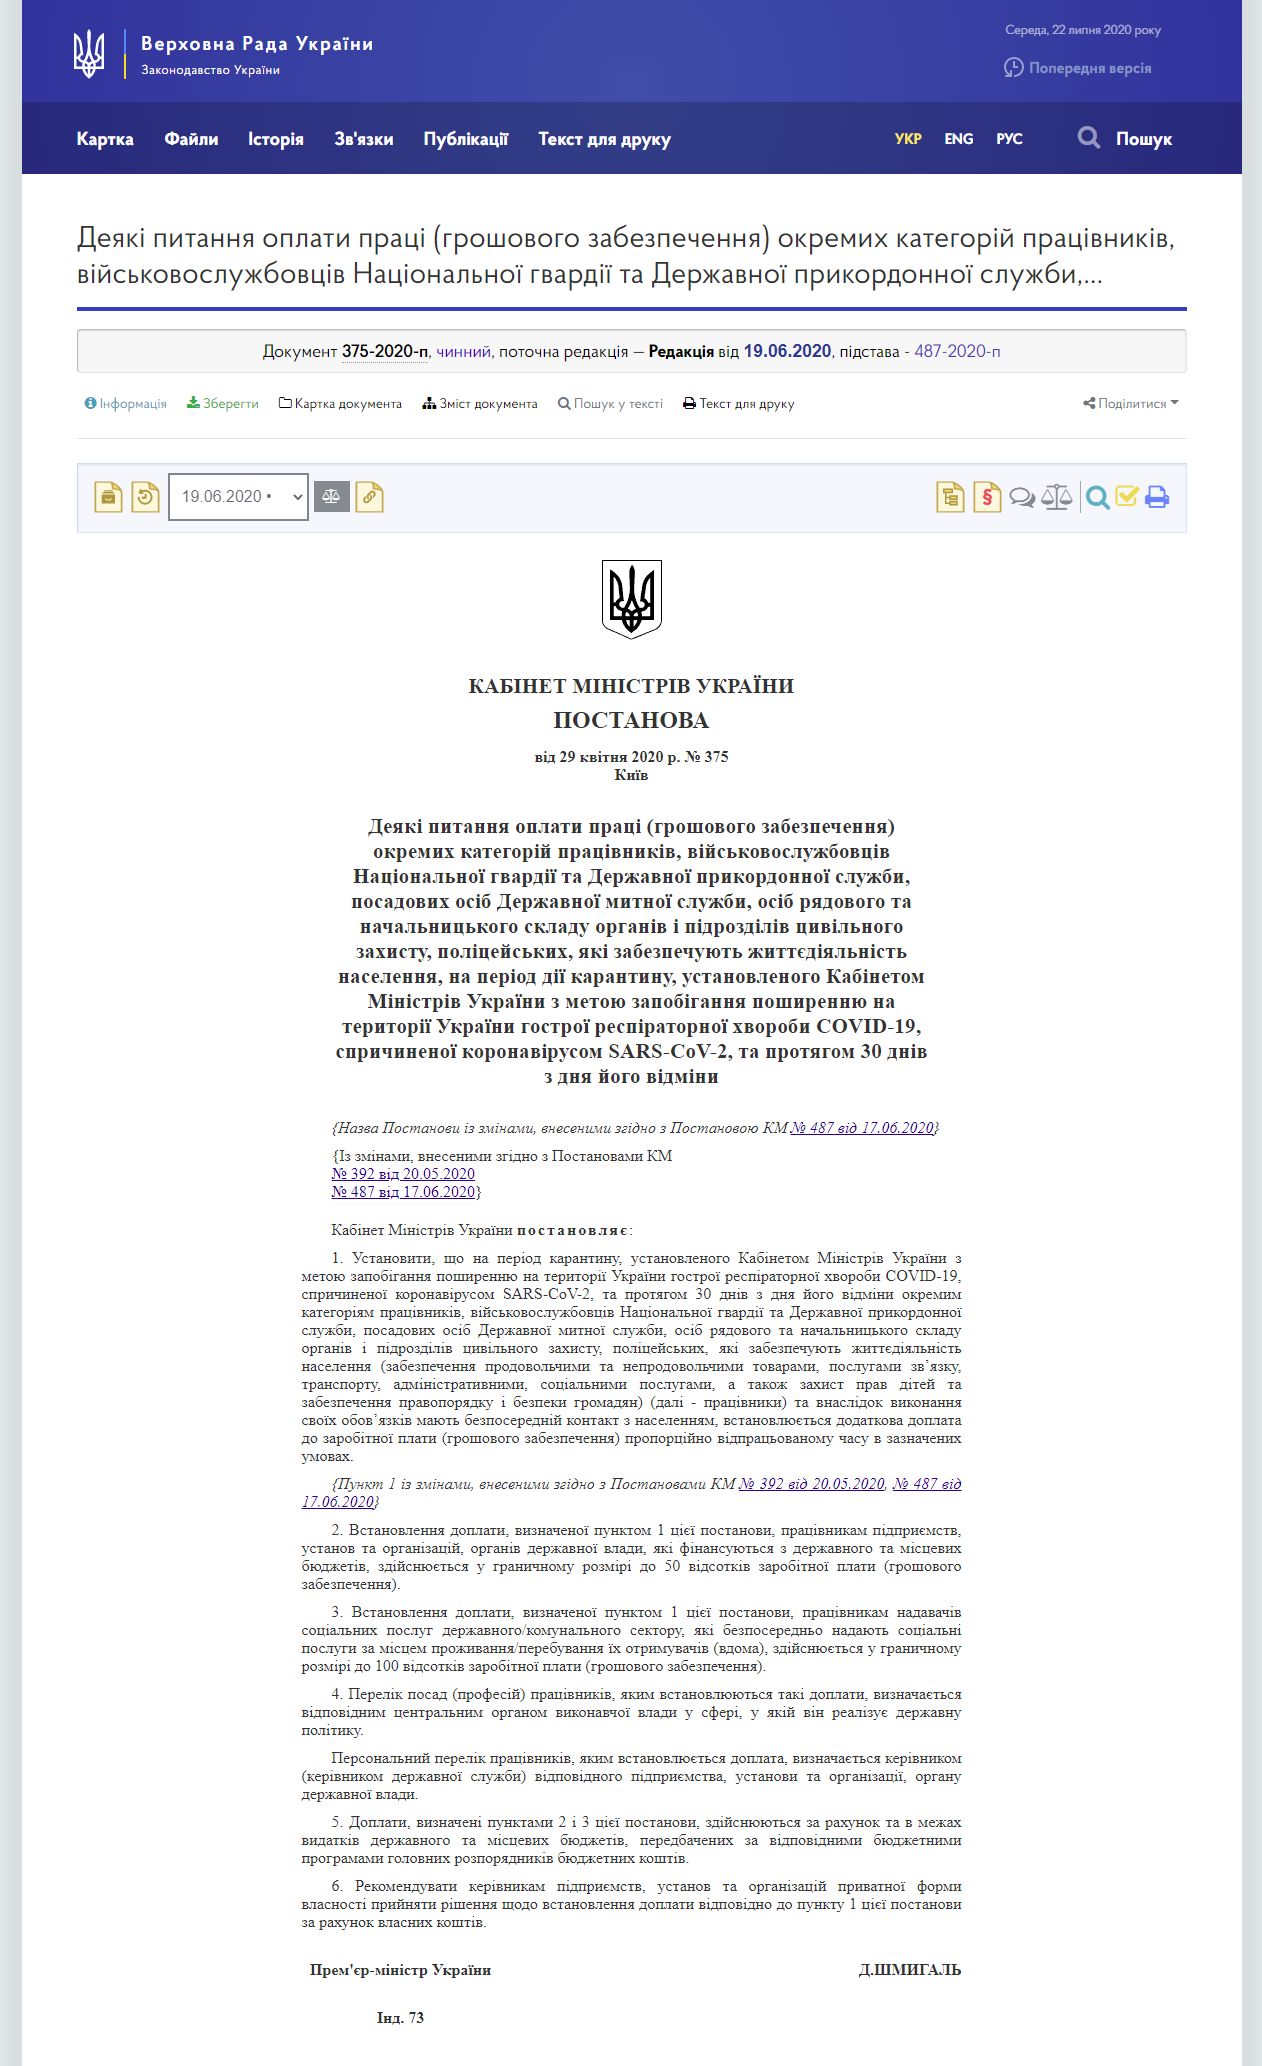 https://zakon.rada.gov.ua/laws/show/375-2020-%D0%BF#Text